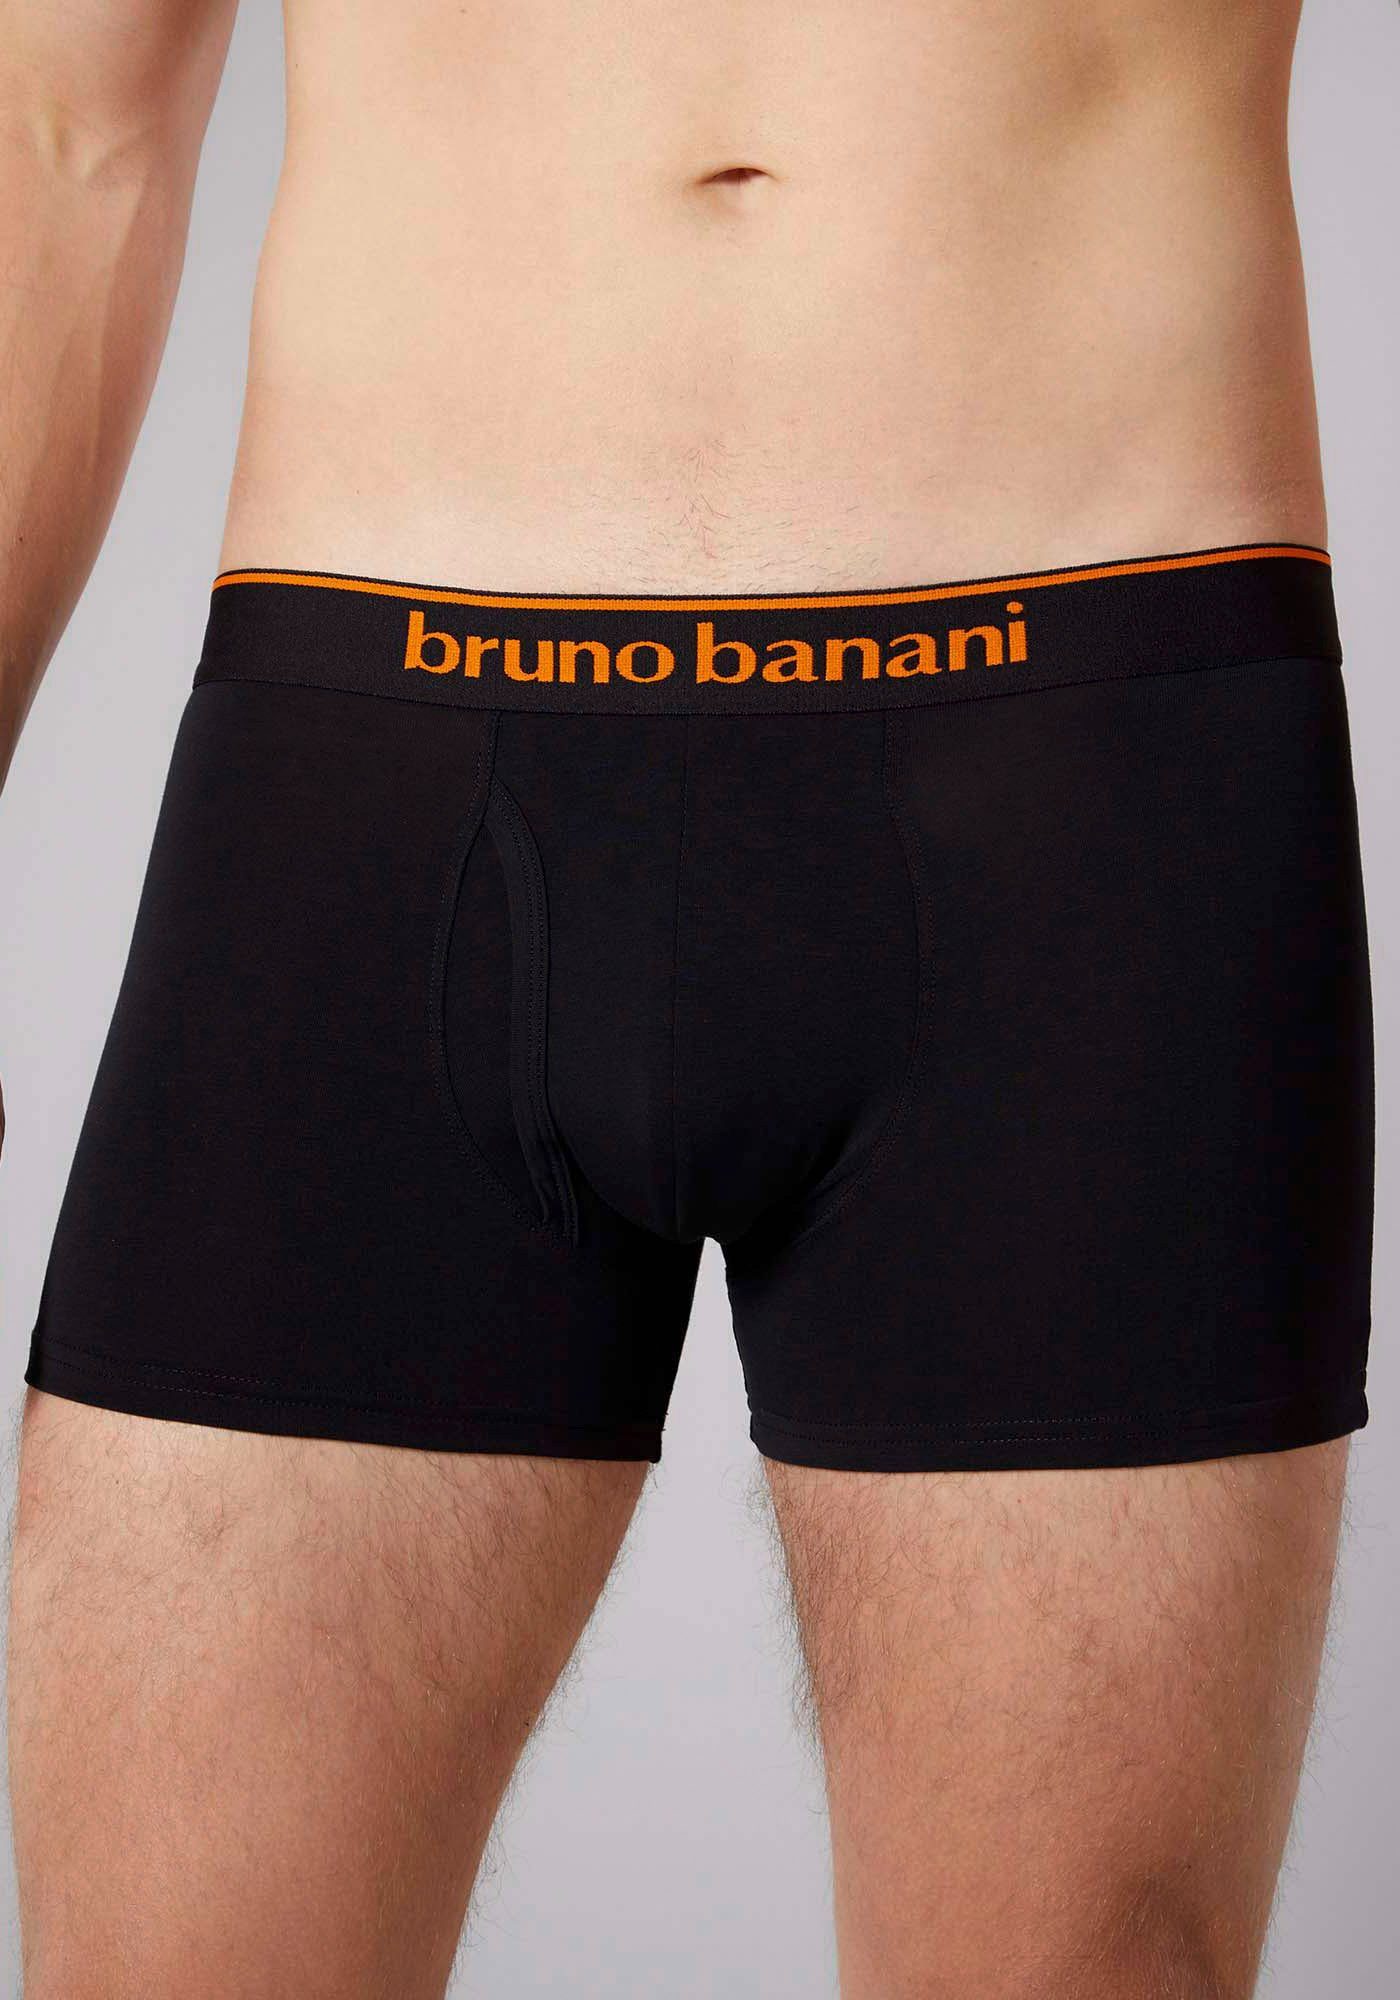 Short Quick Banani Kontrastfarbene Boxershorts (Packung, 2-St) Access Bruno schwarz 2Pack Details